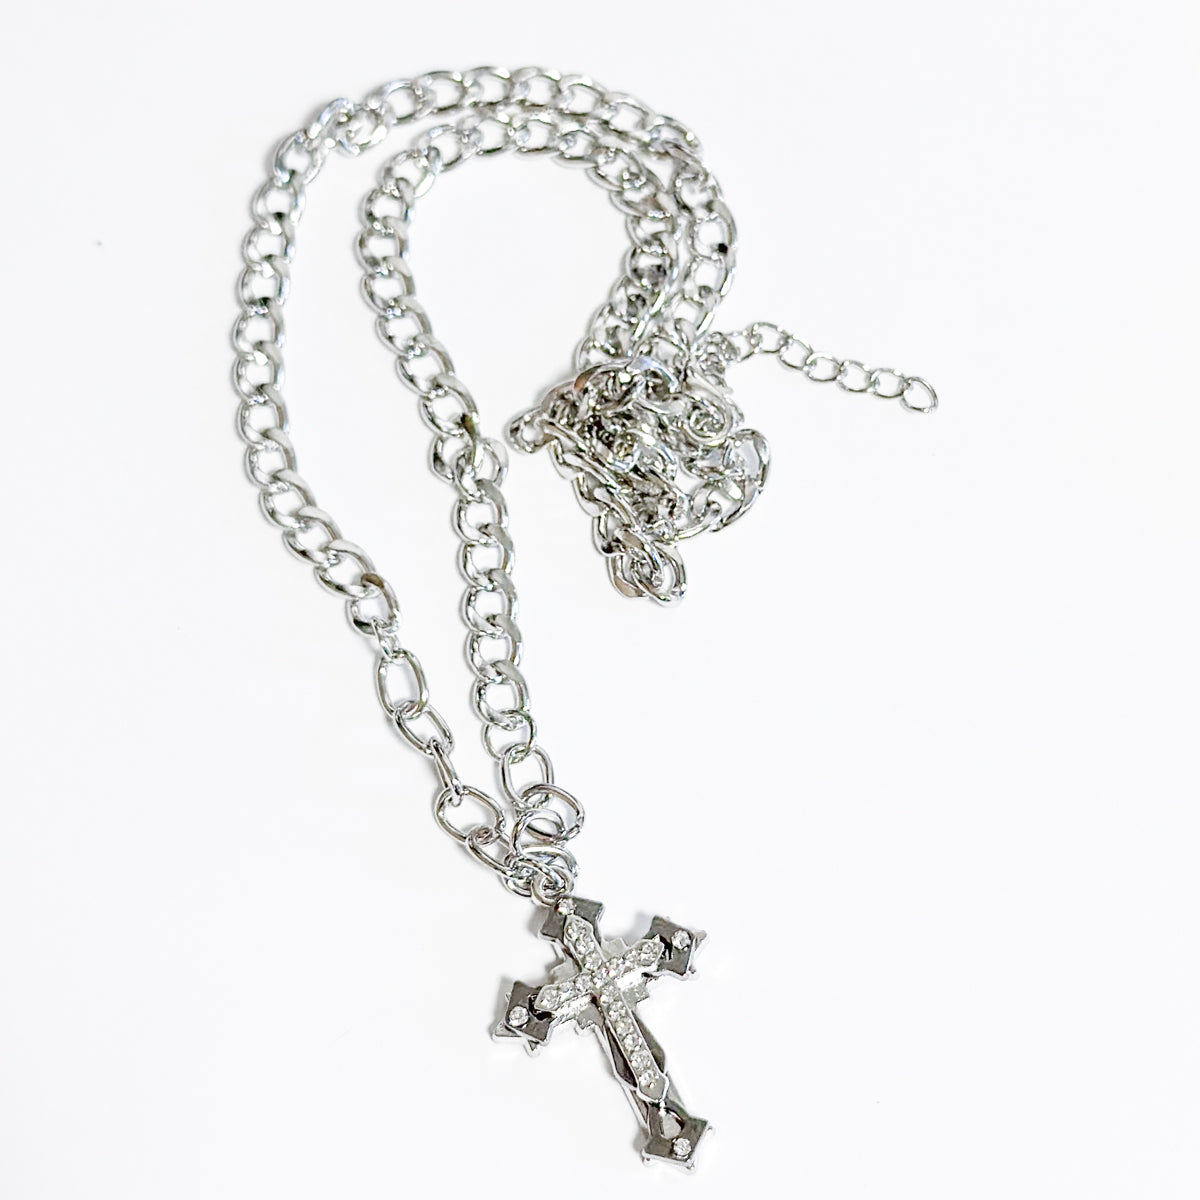 CROSS Rhinestone Chain Necklace Silver